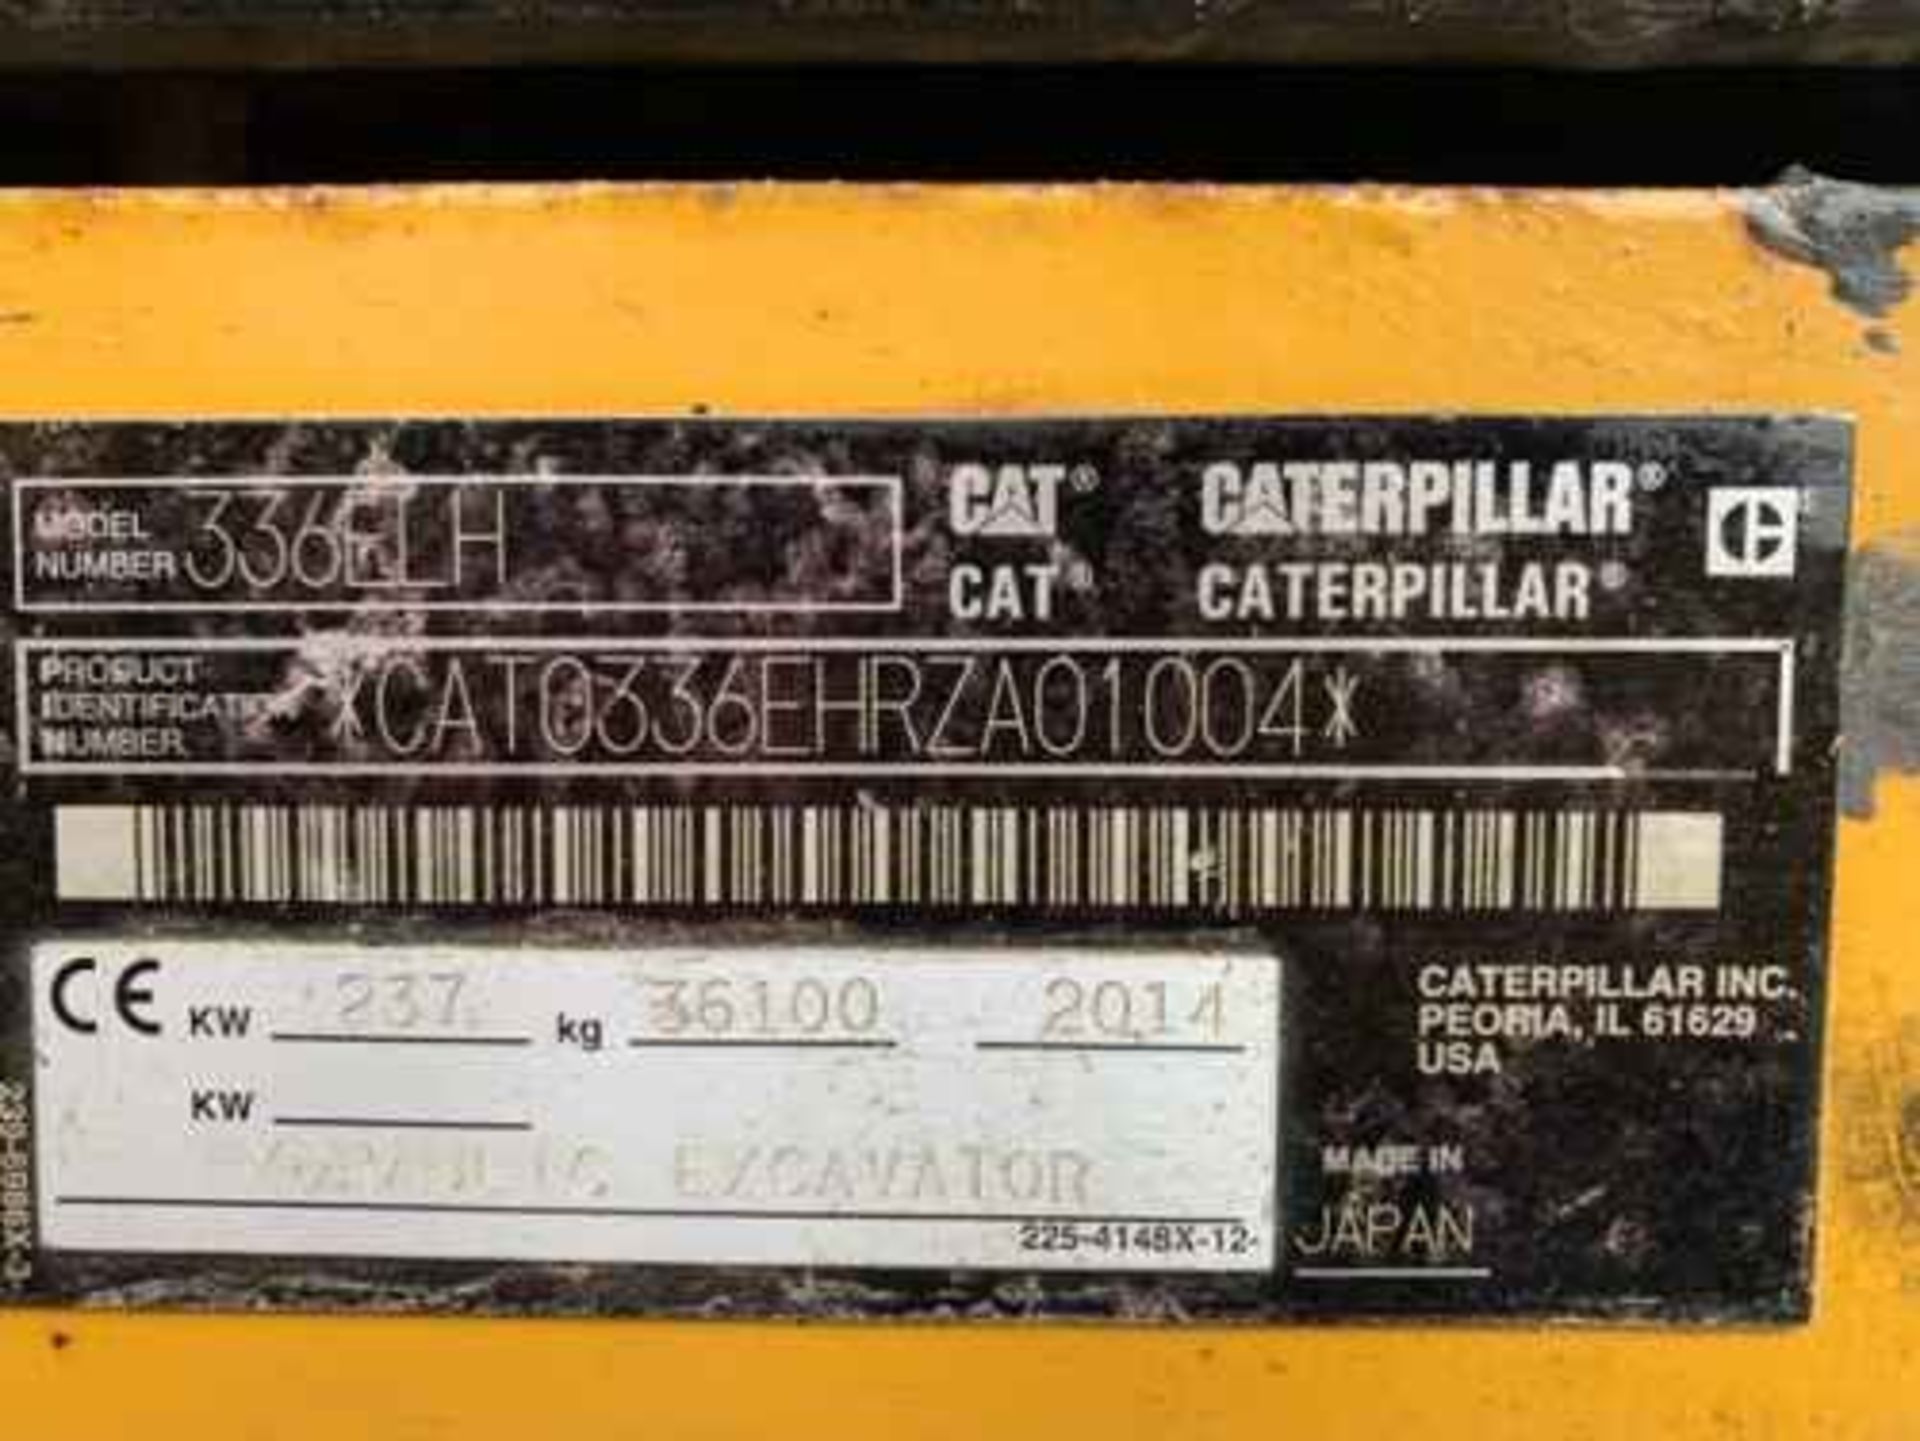 2014 Caterpillar 336ELH Tracked Excavator - Image 6 of 15